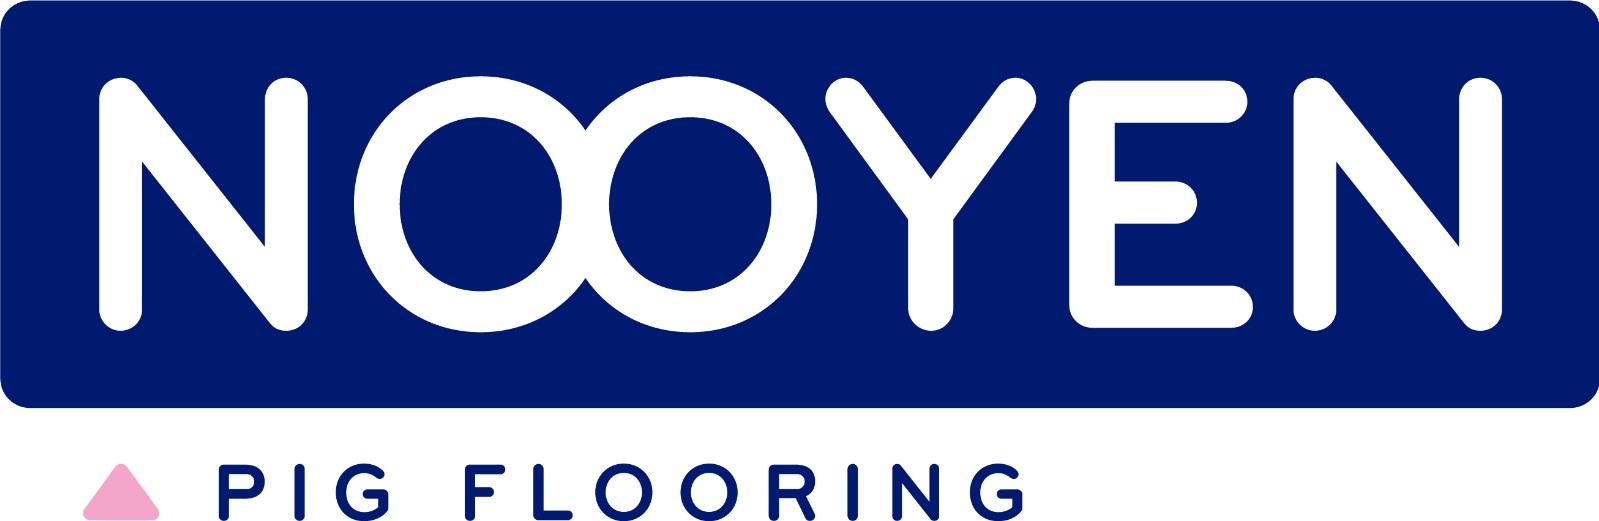 Nooyen Pig Flooring logo